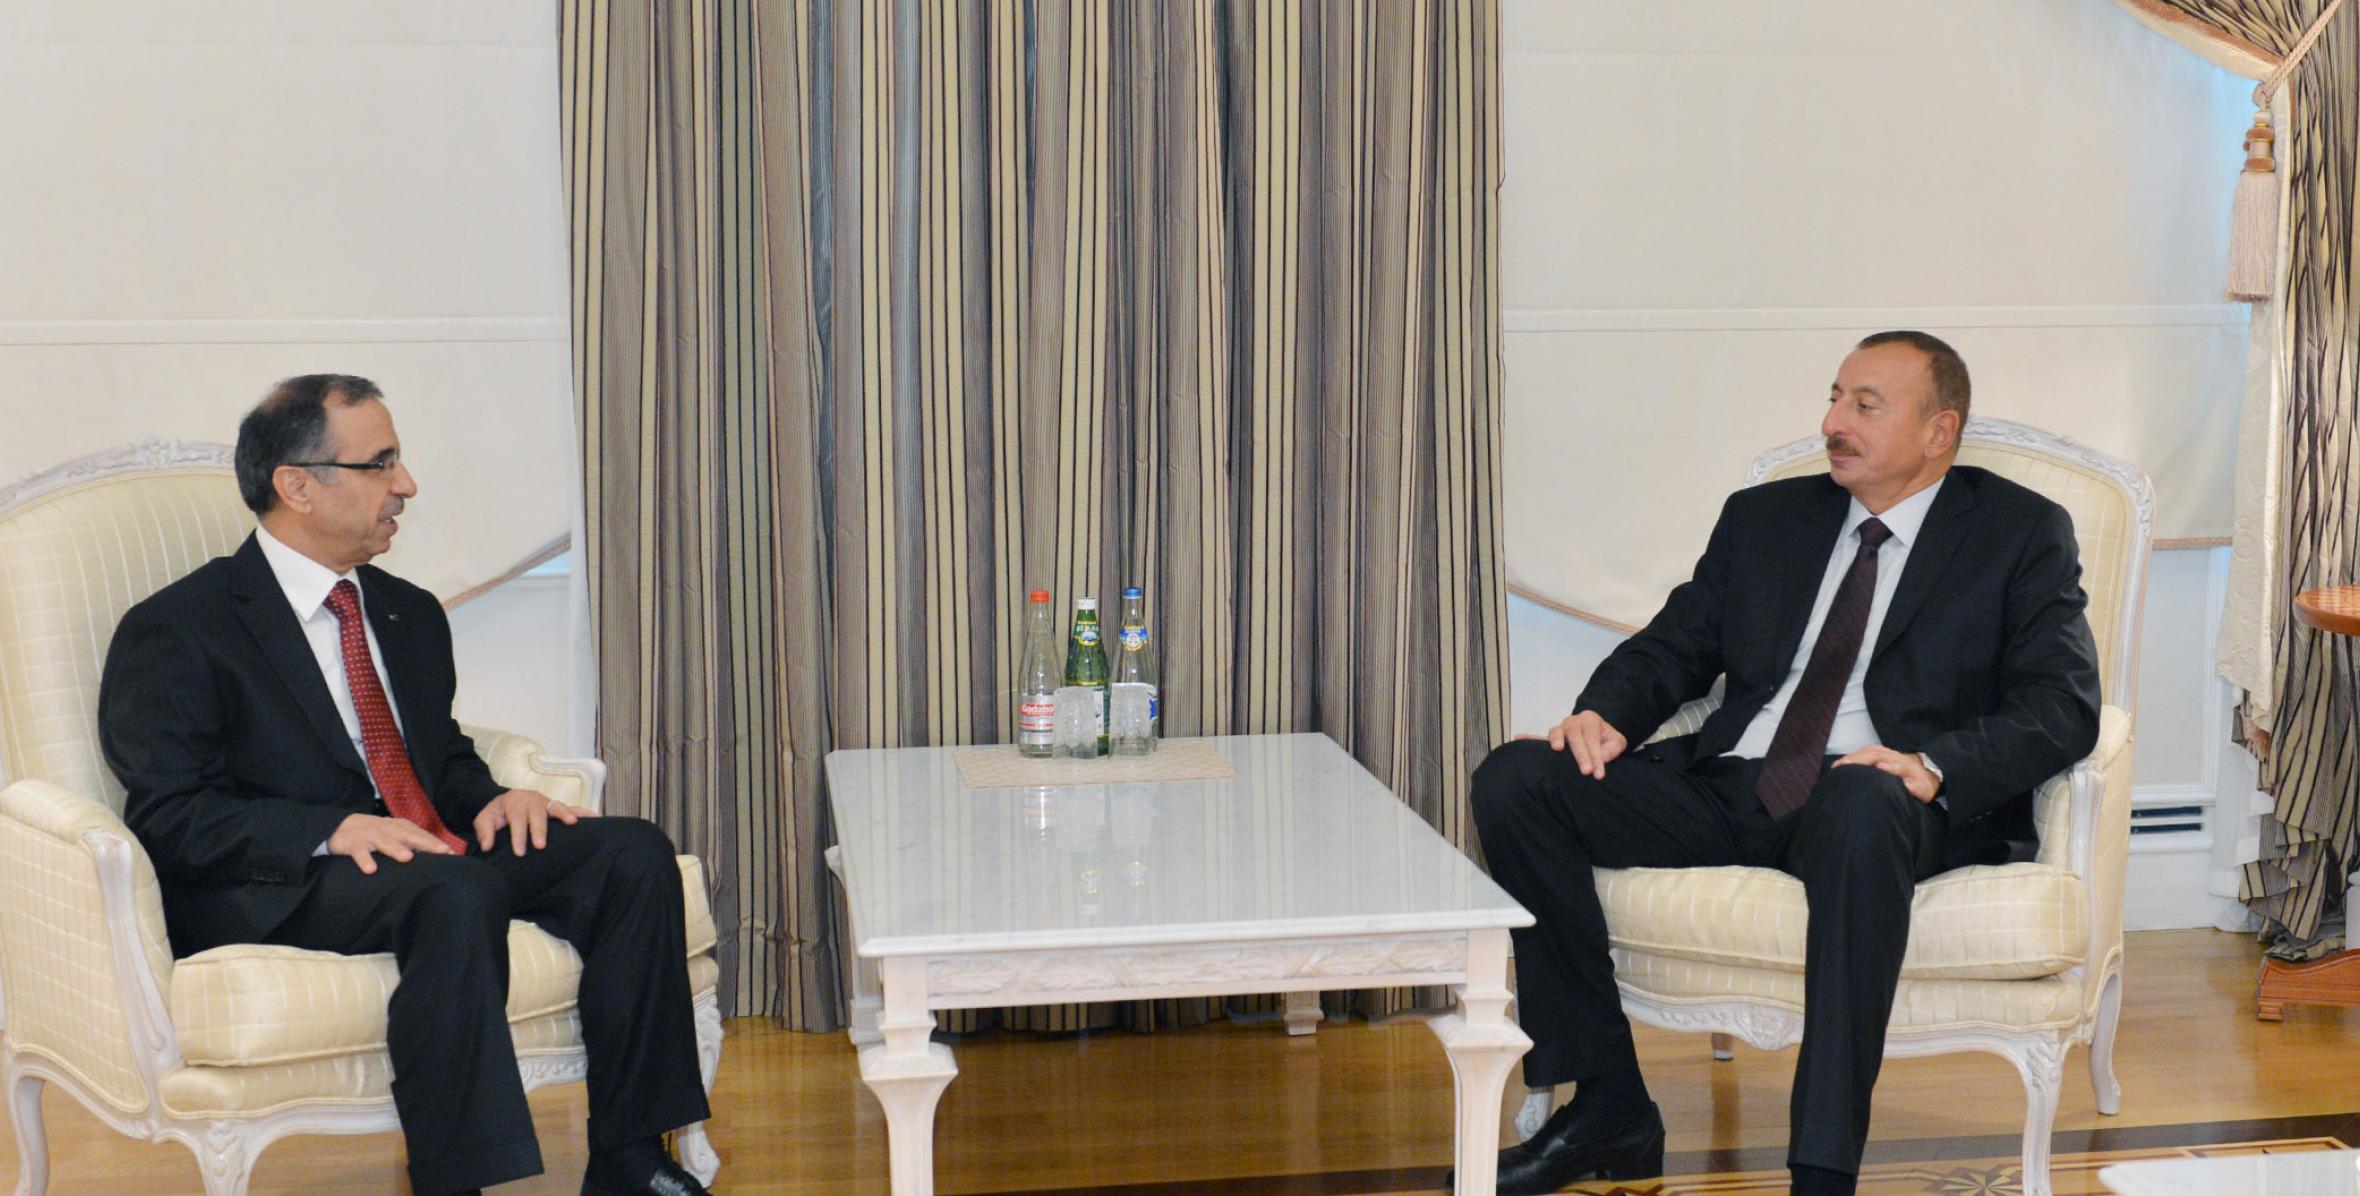 Ilham Aliyev received the Ambassador of Jordan to Azerbaijan at the end of his diplomatic mission in Azerbaijan